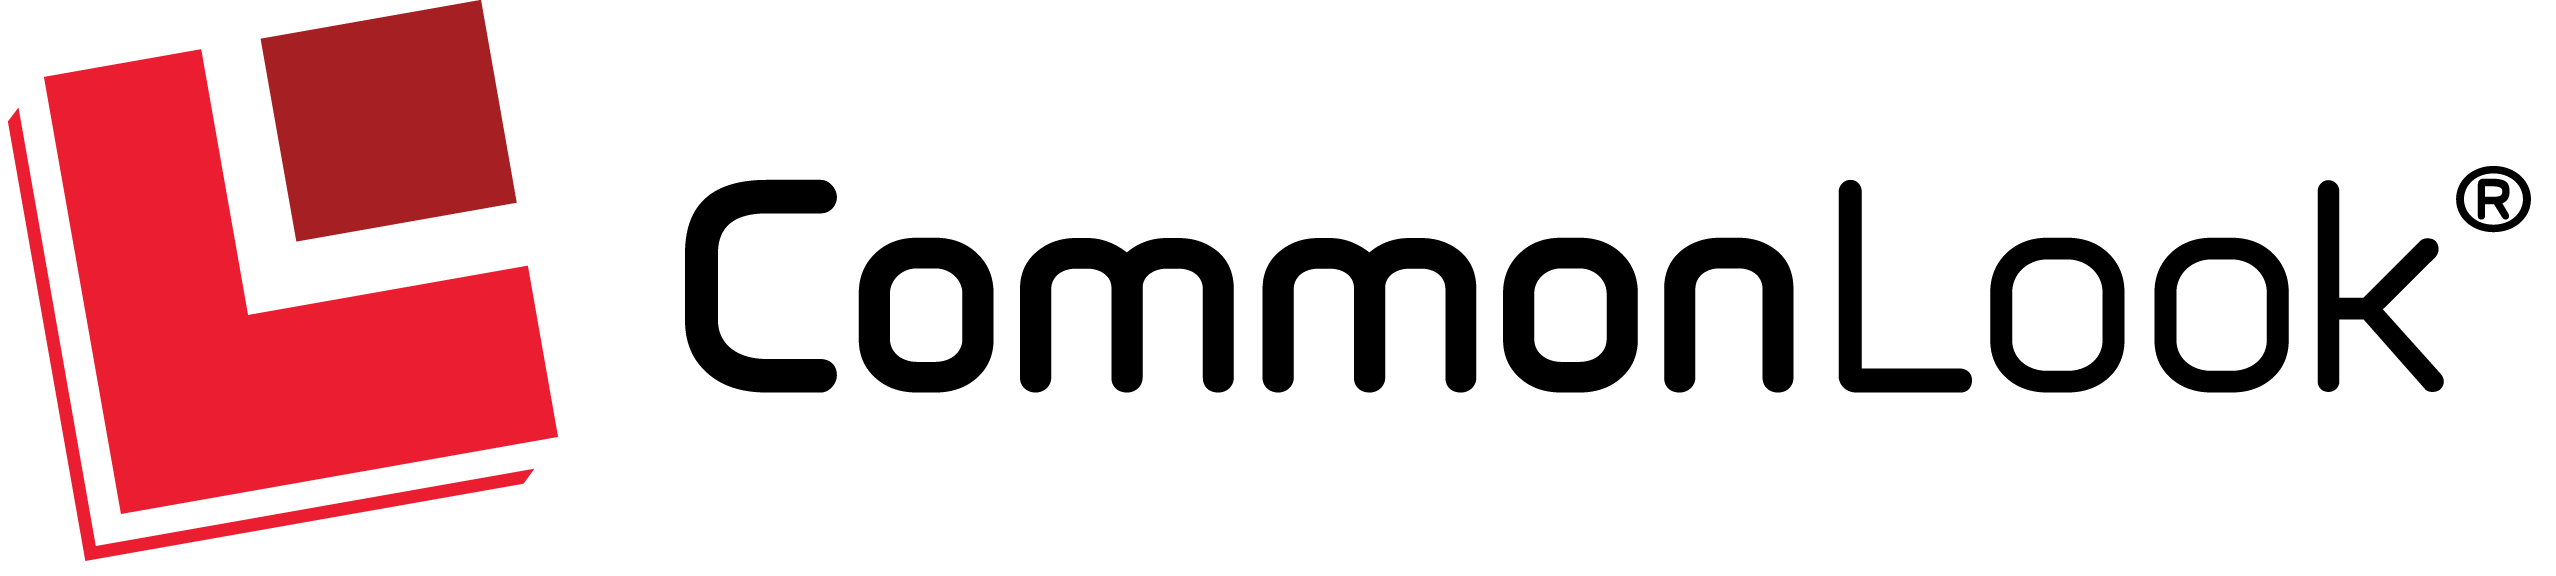 CommonLook logo